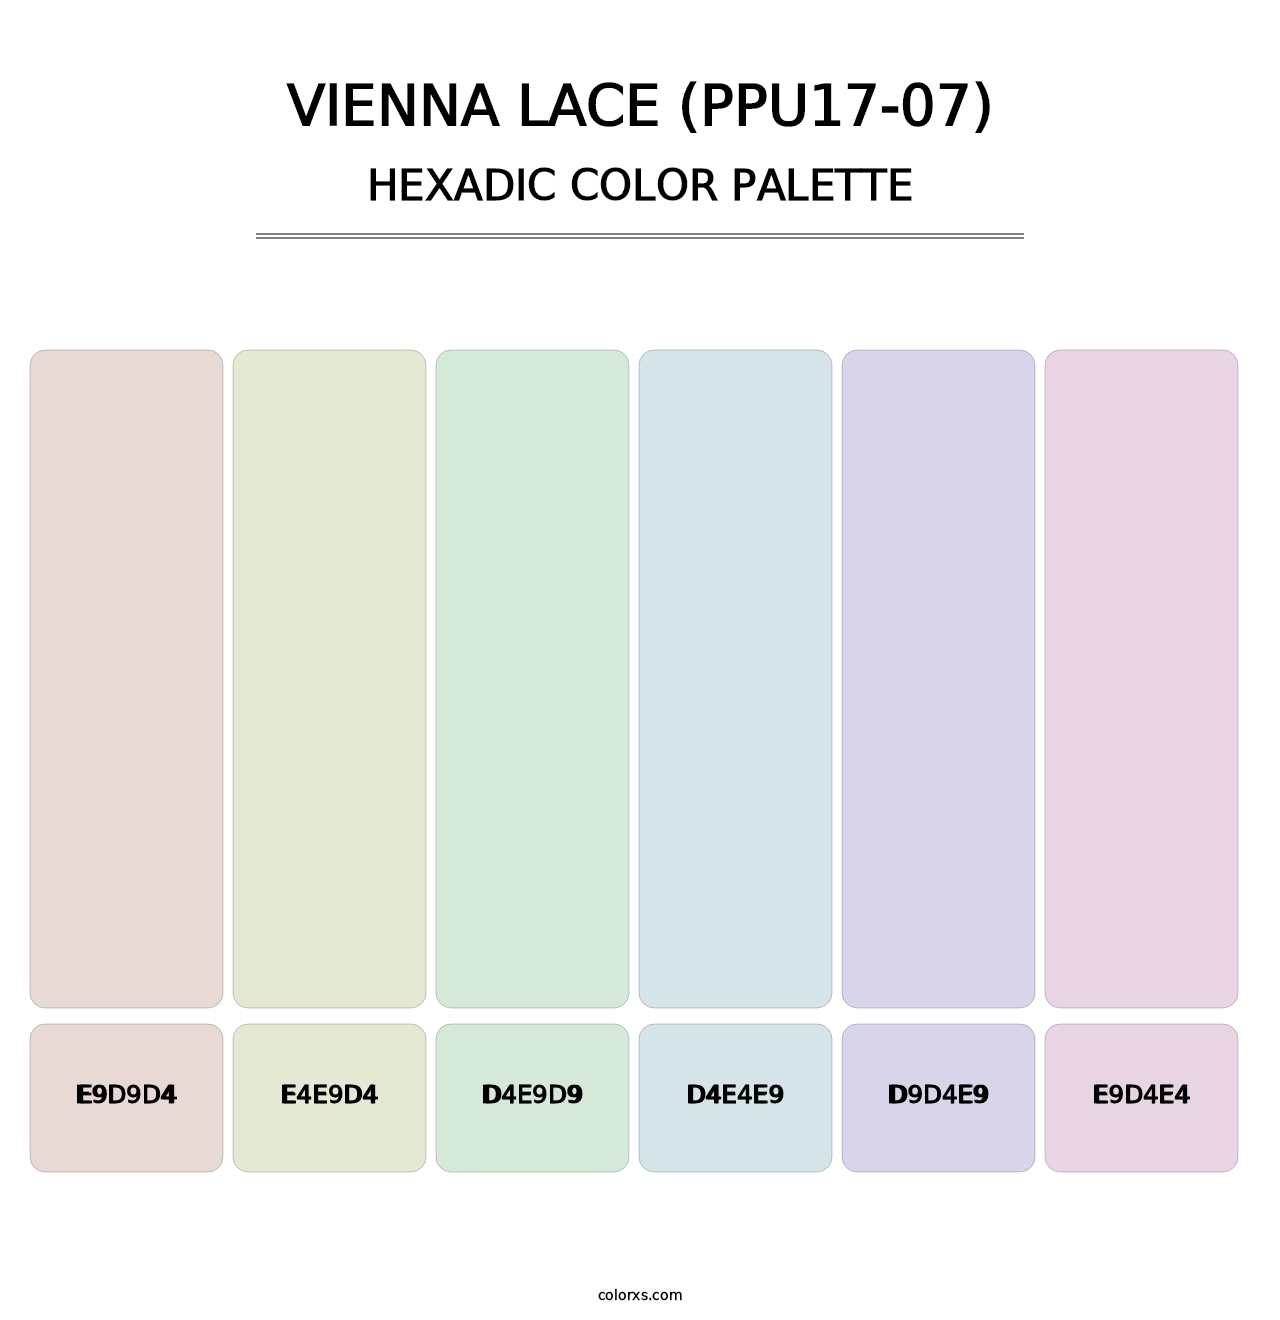 Vienna Lace (PPU17-07) - Hexadic Color Palette